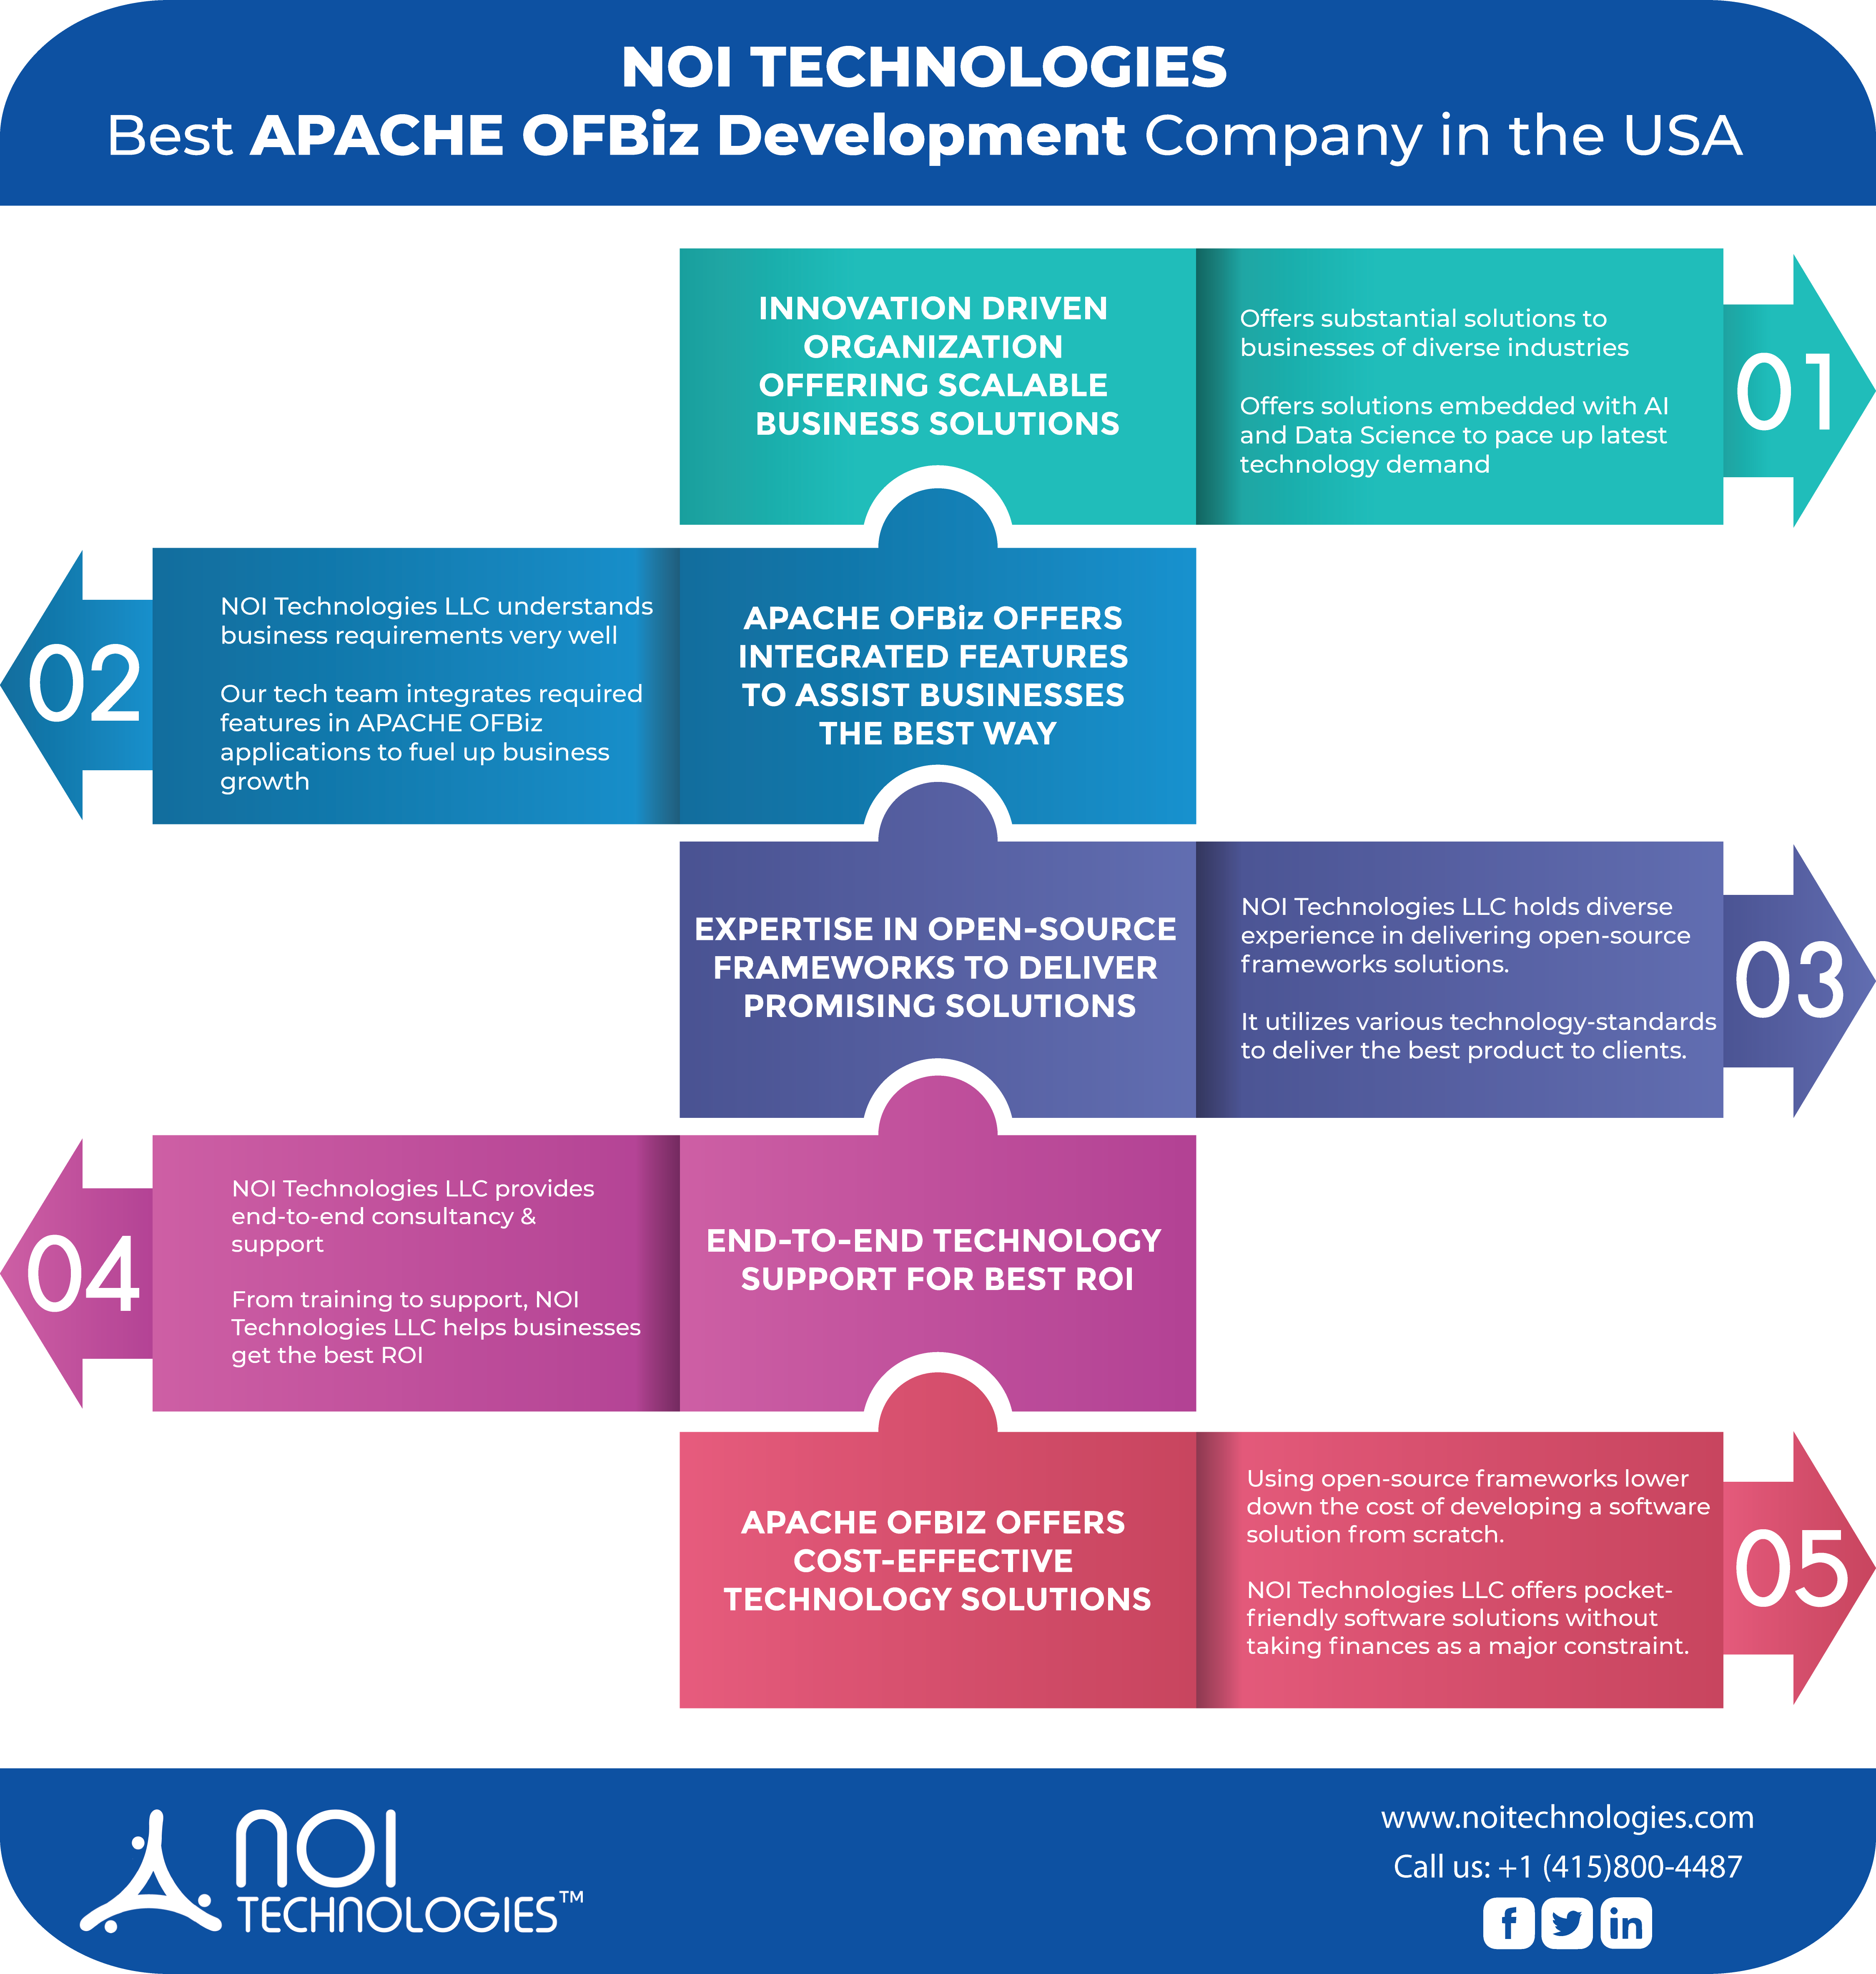 Apache OFBiz Development